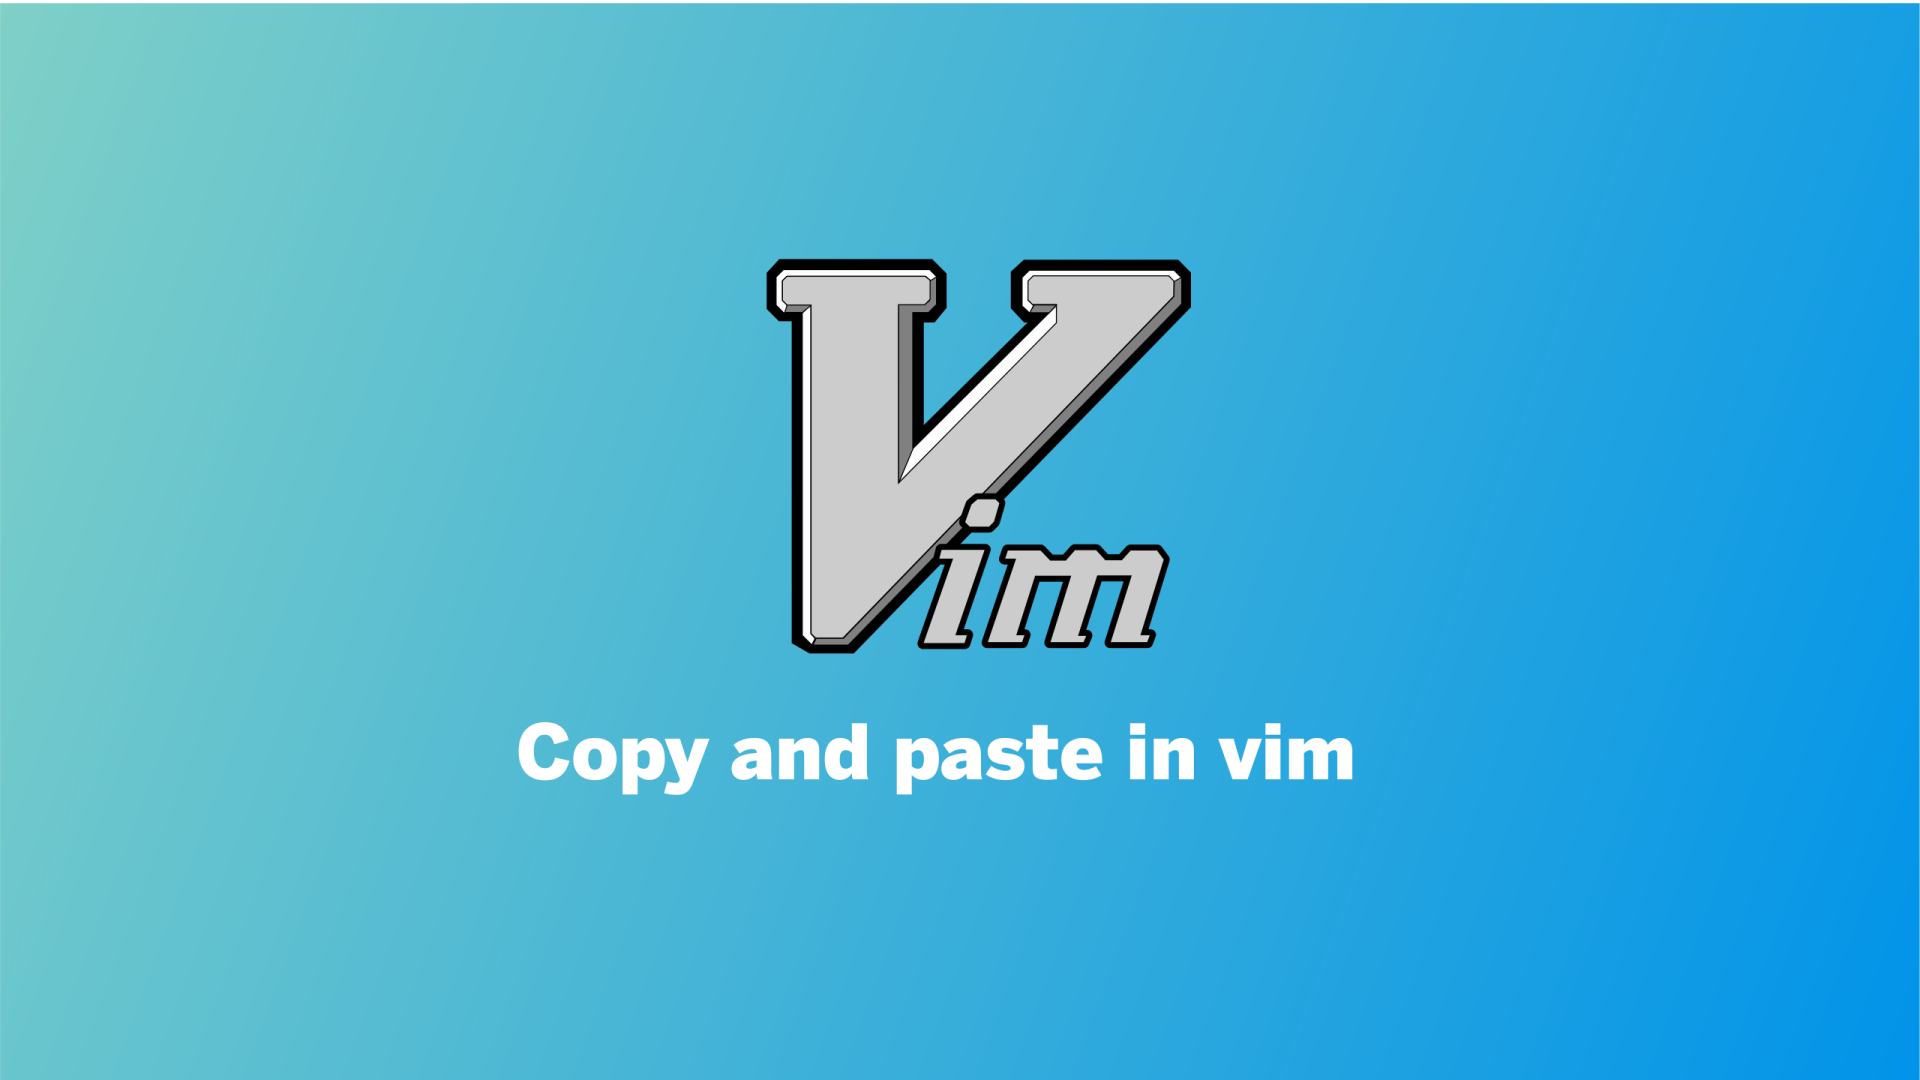 Copy and paste in vim